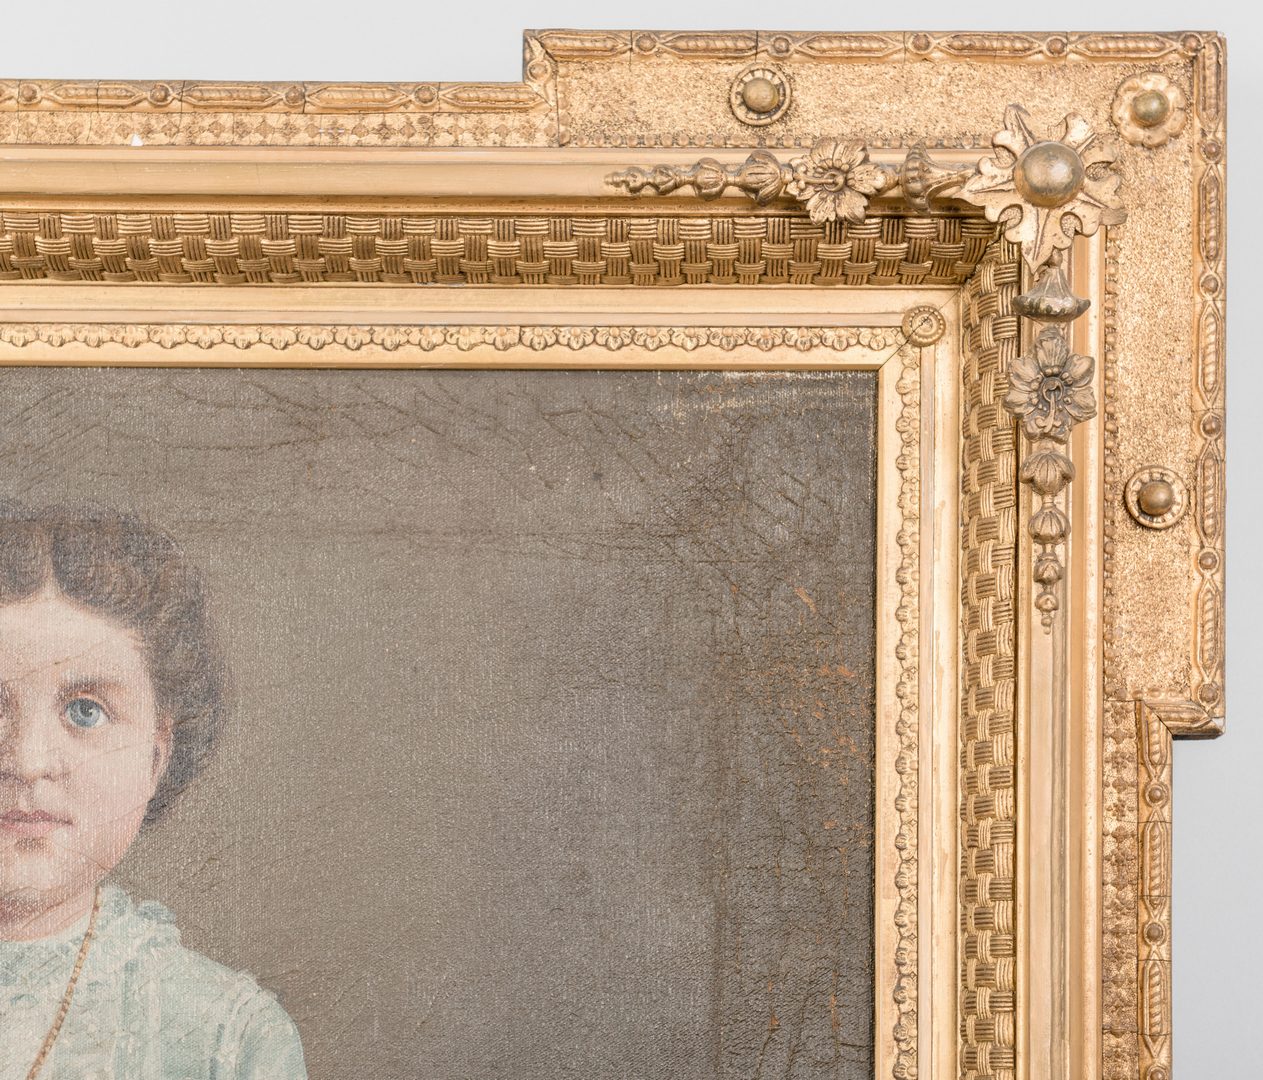 Lot 880: Child portrait in Aesthetic Frame